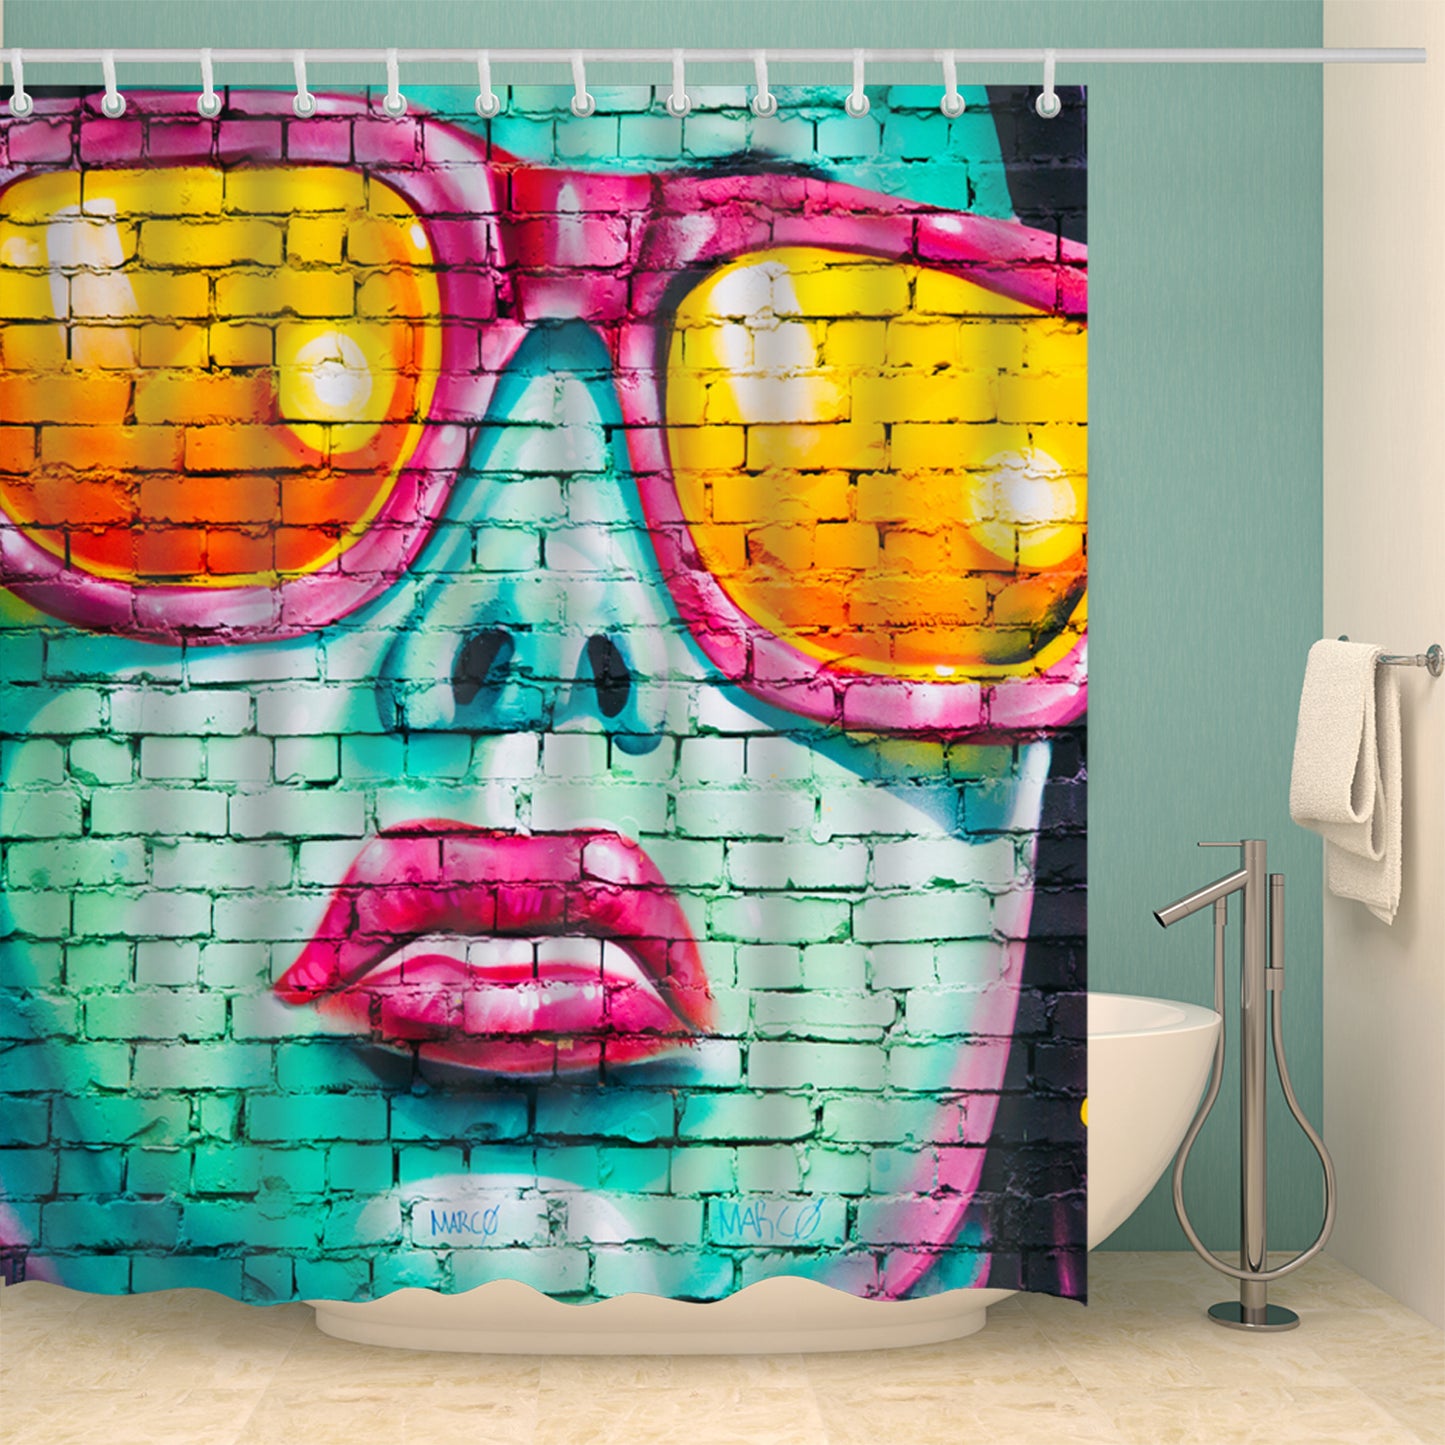 Cool Girl Graffiti Wall Art Shower Curtain